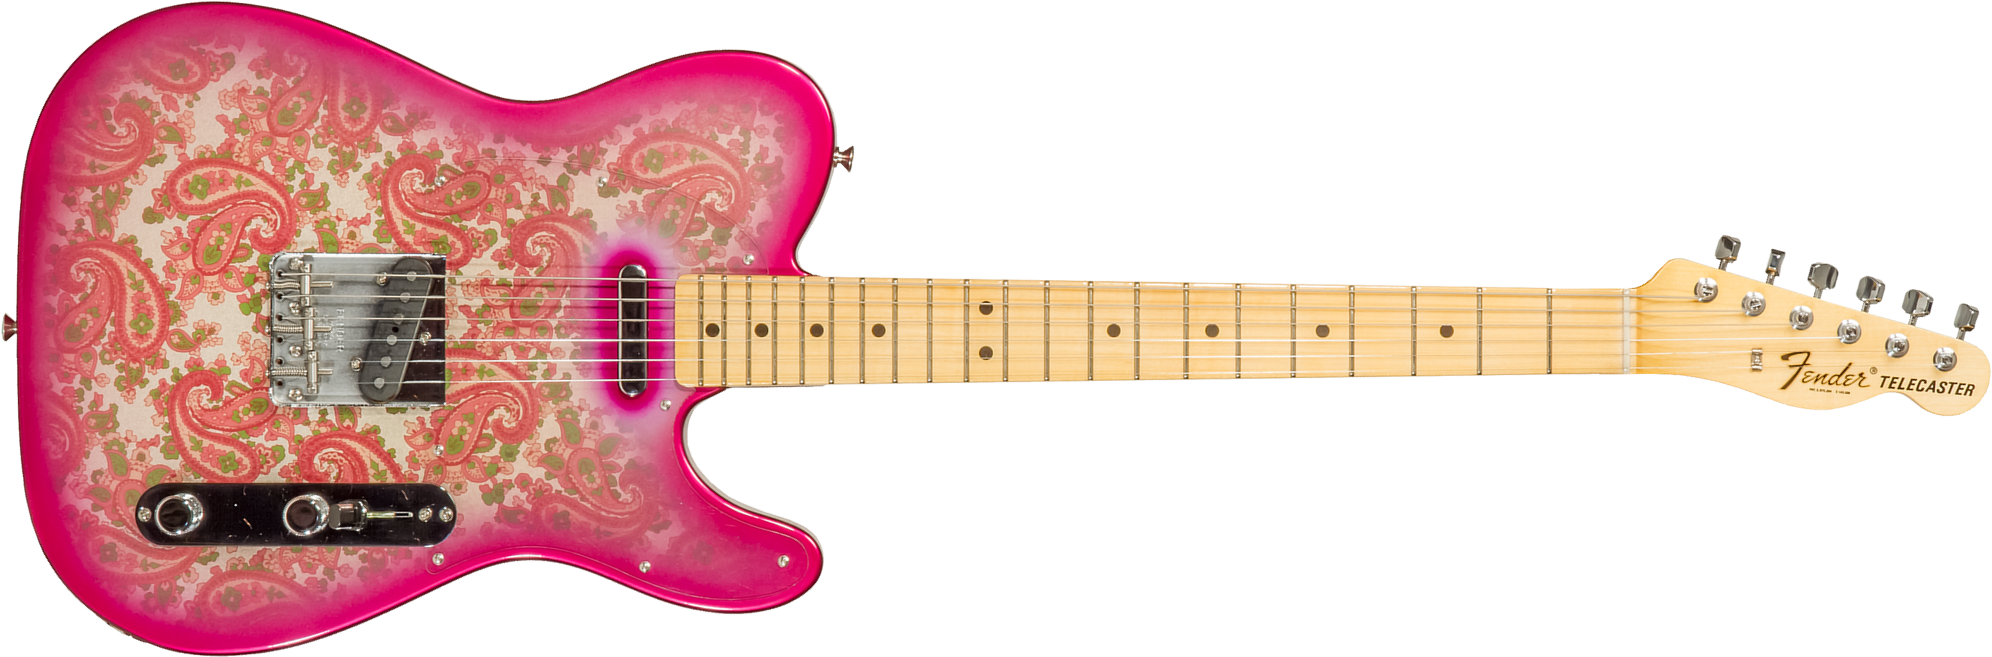 Fender Custom Shop Tele Vintage Custom 1968 2s Ht Mn #r126998 - Nos Pink Paisley - Televorm elektrische gitaar - Main picture